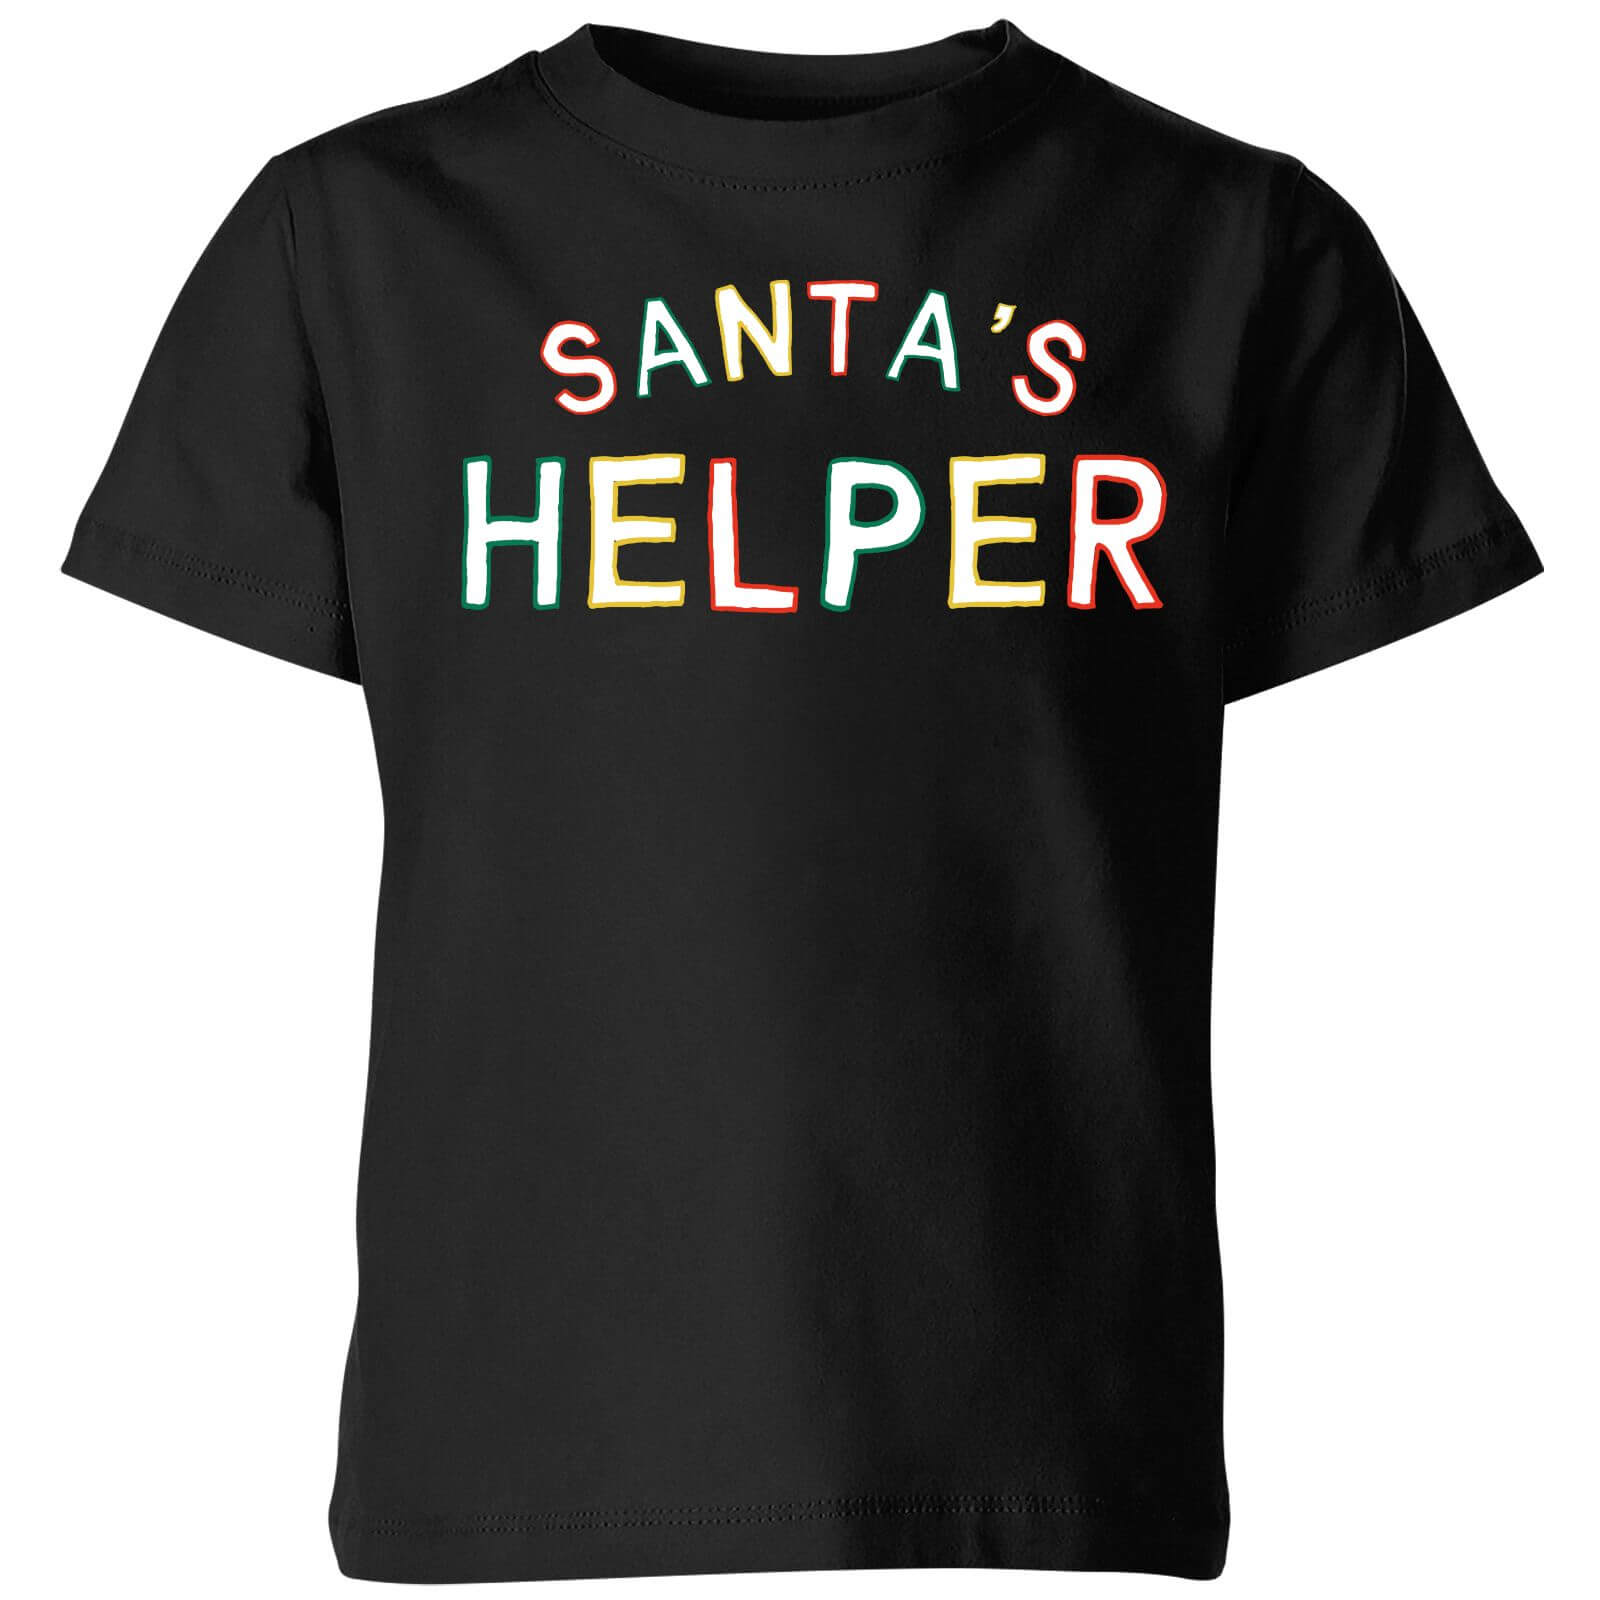 Santa's Helper Kids' T-Shirt - Black - 3-4 Years - Black